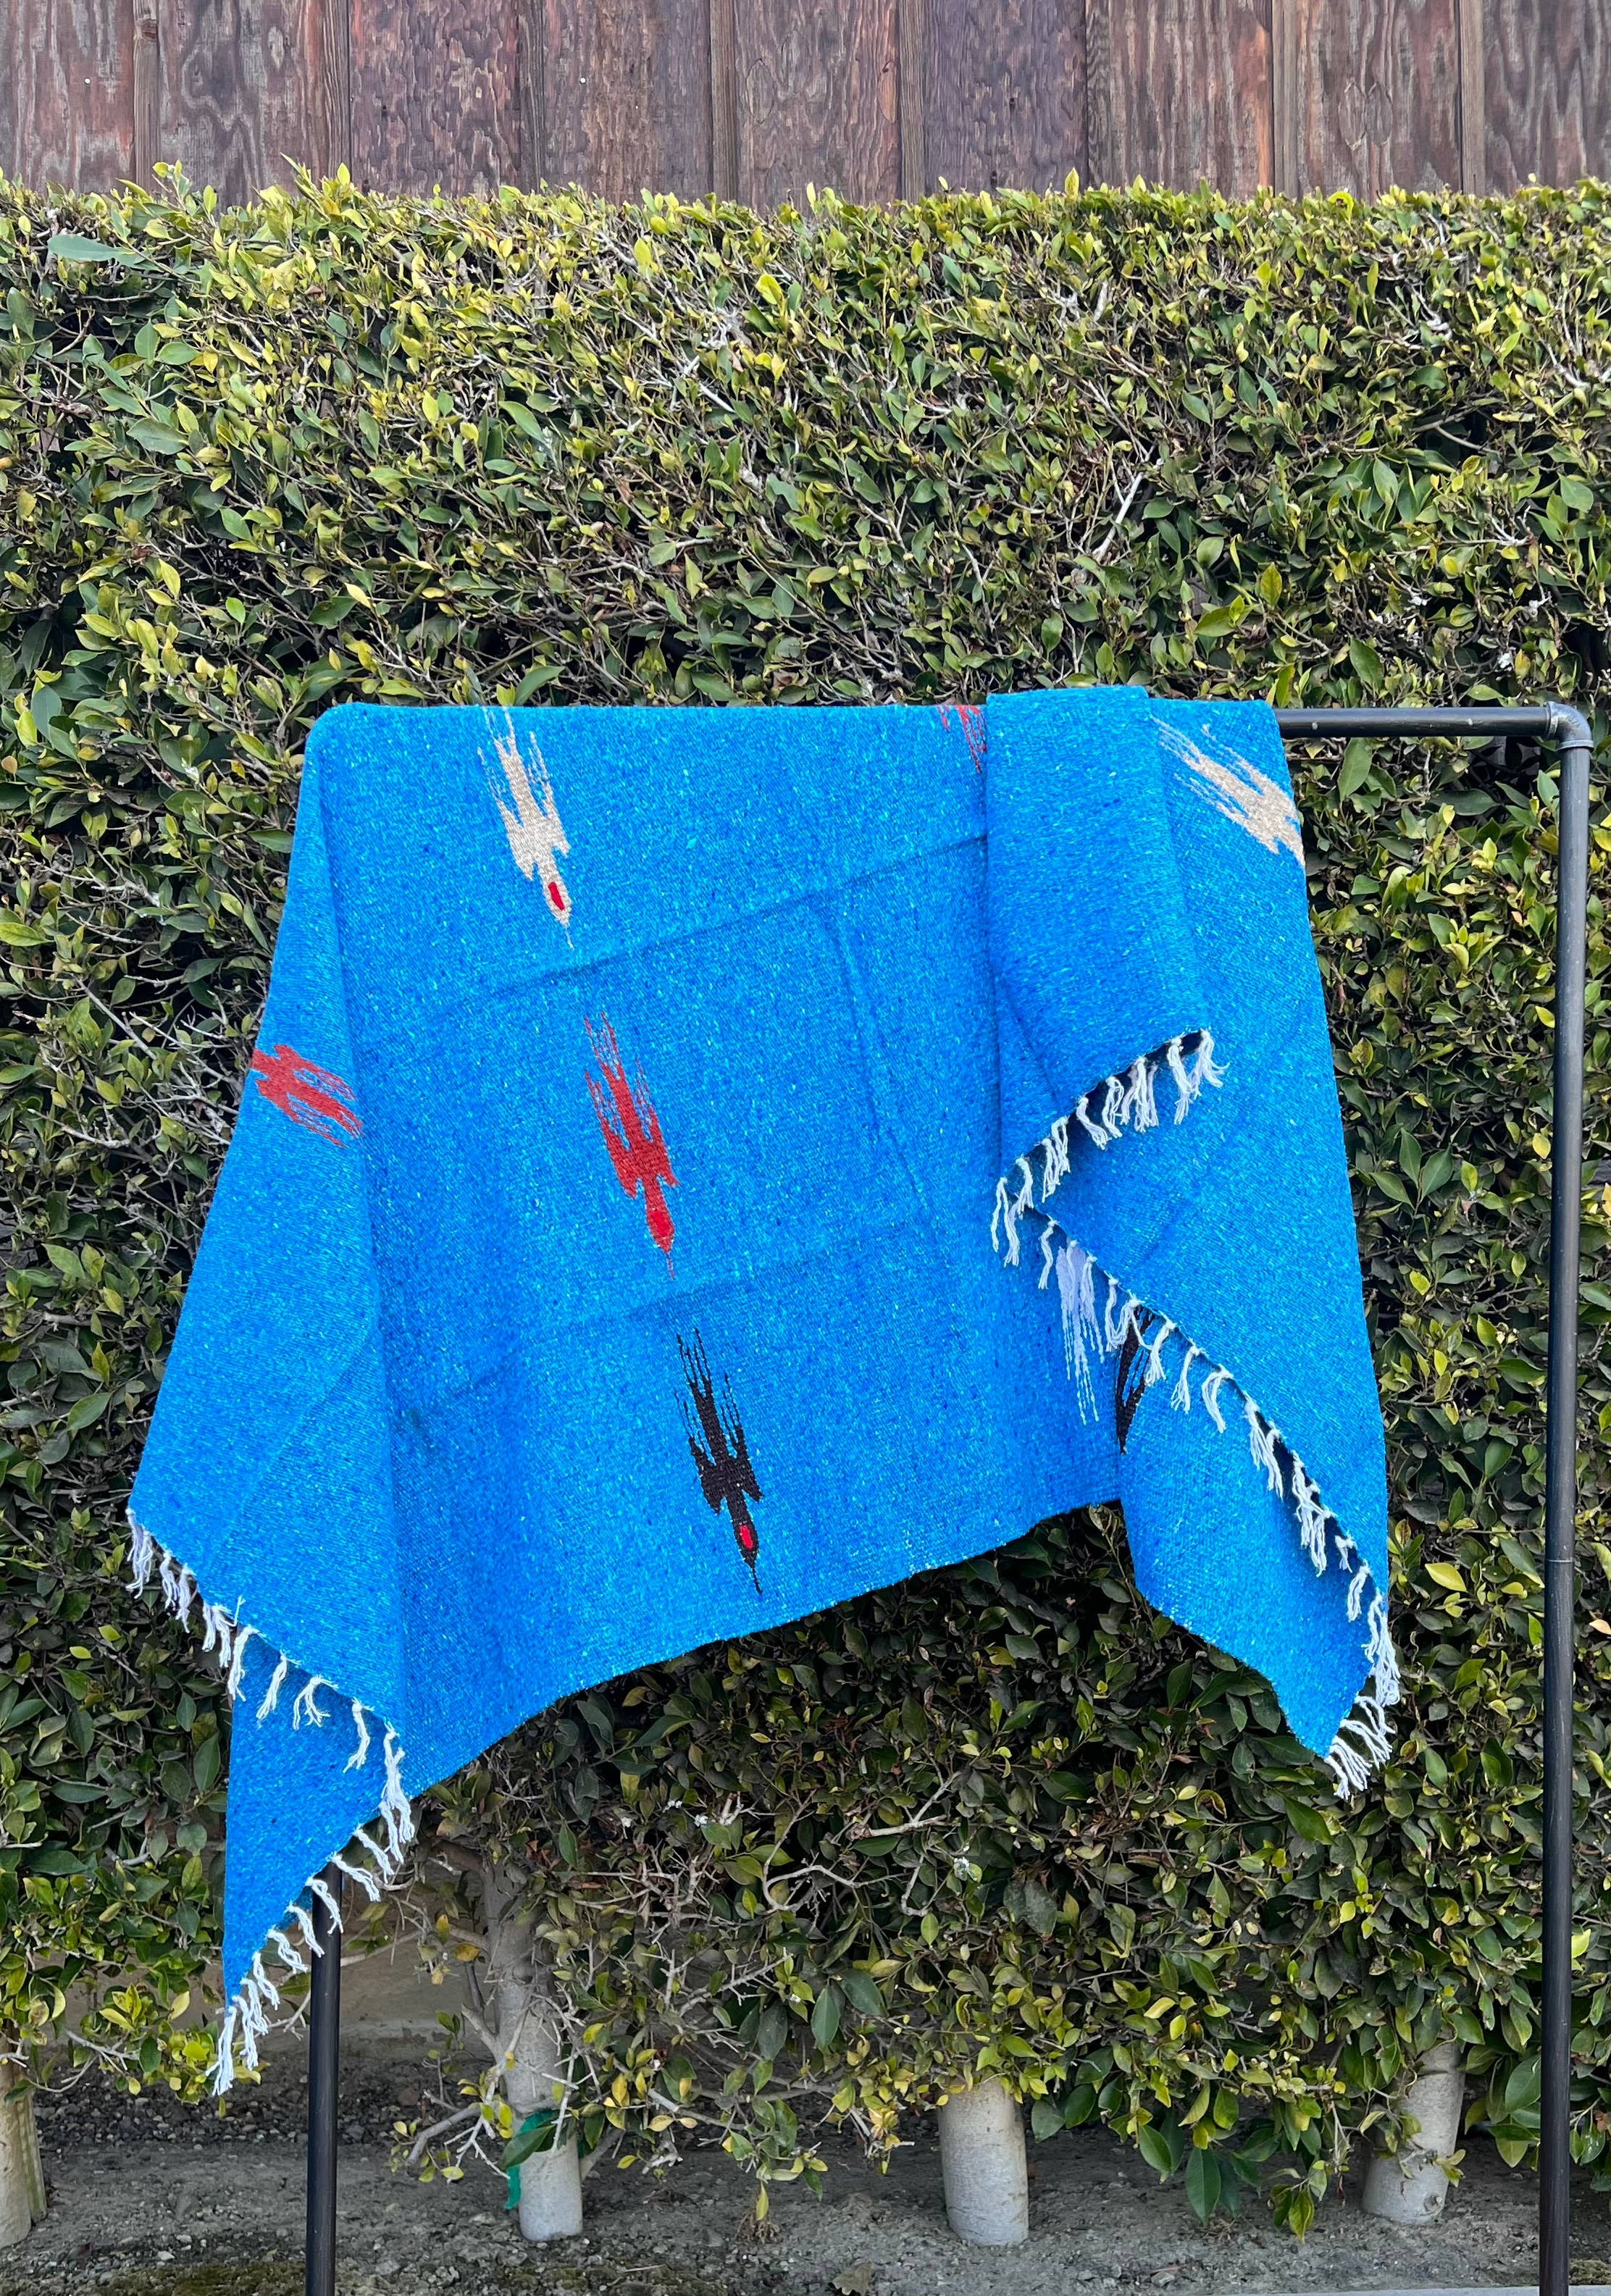 Thunderbird Throw Blanket l Blue Throw l Mexican Blanket